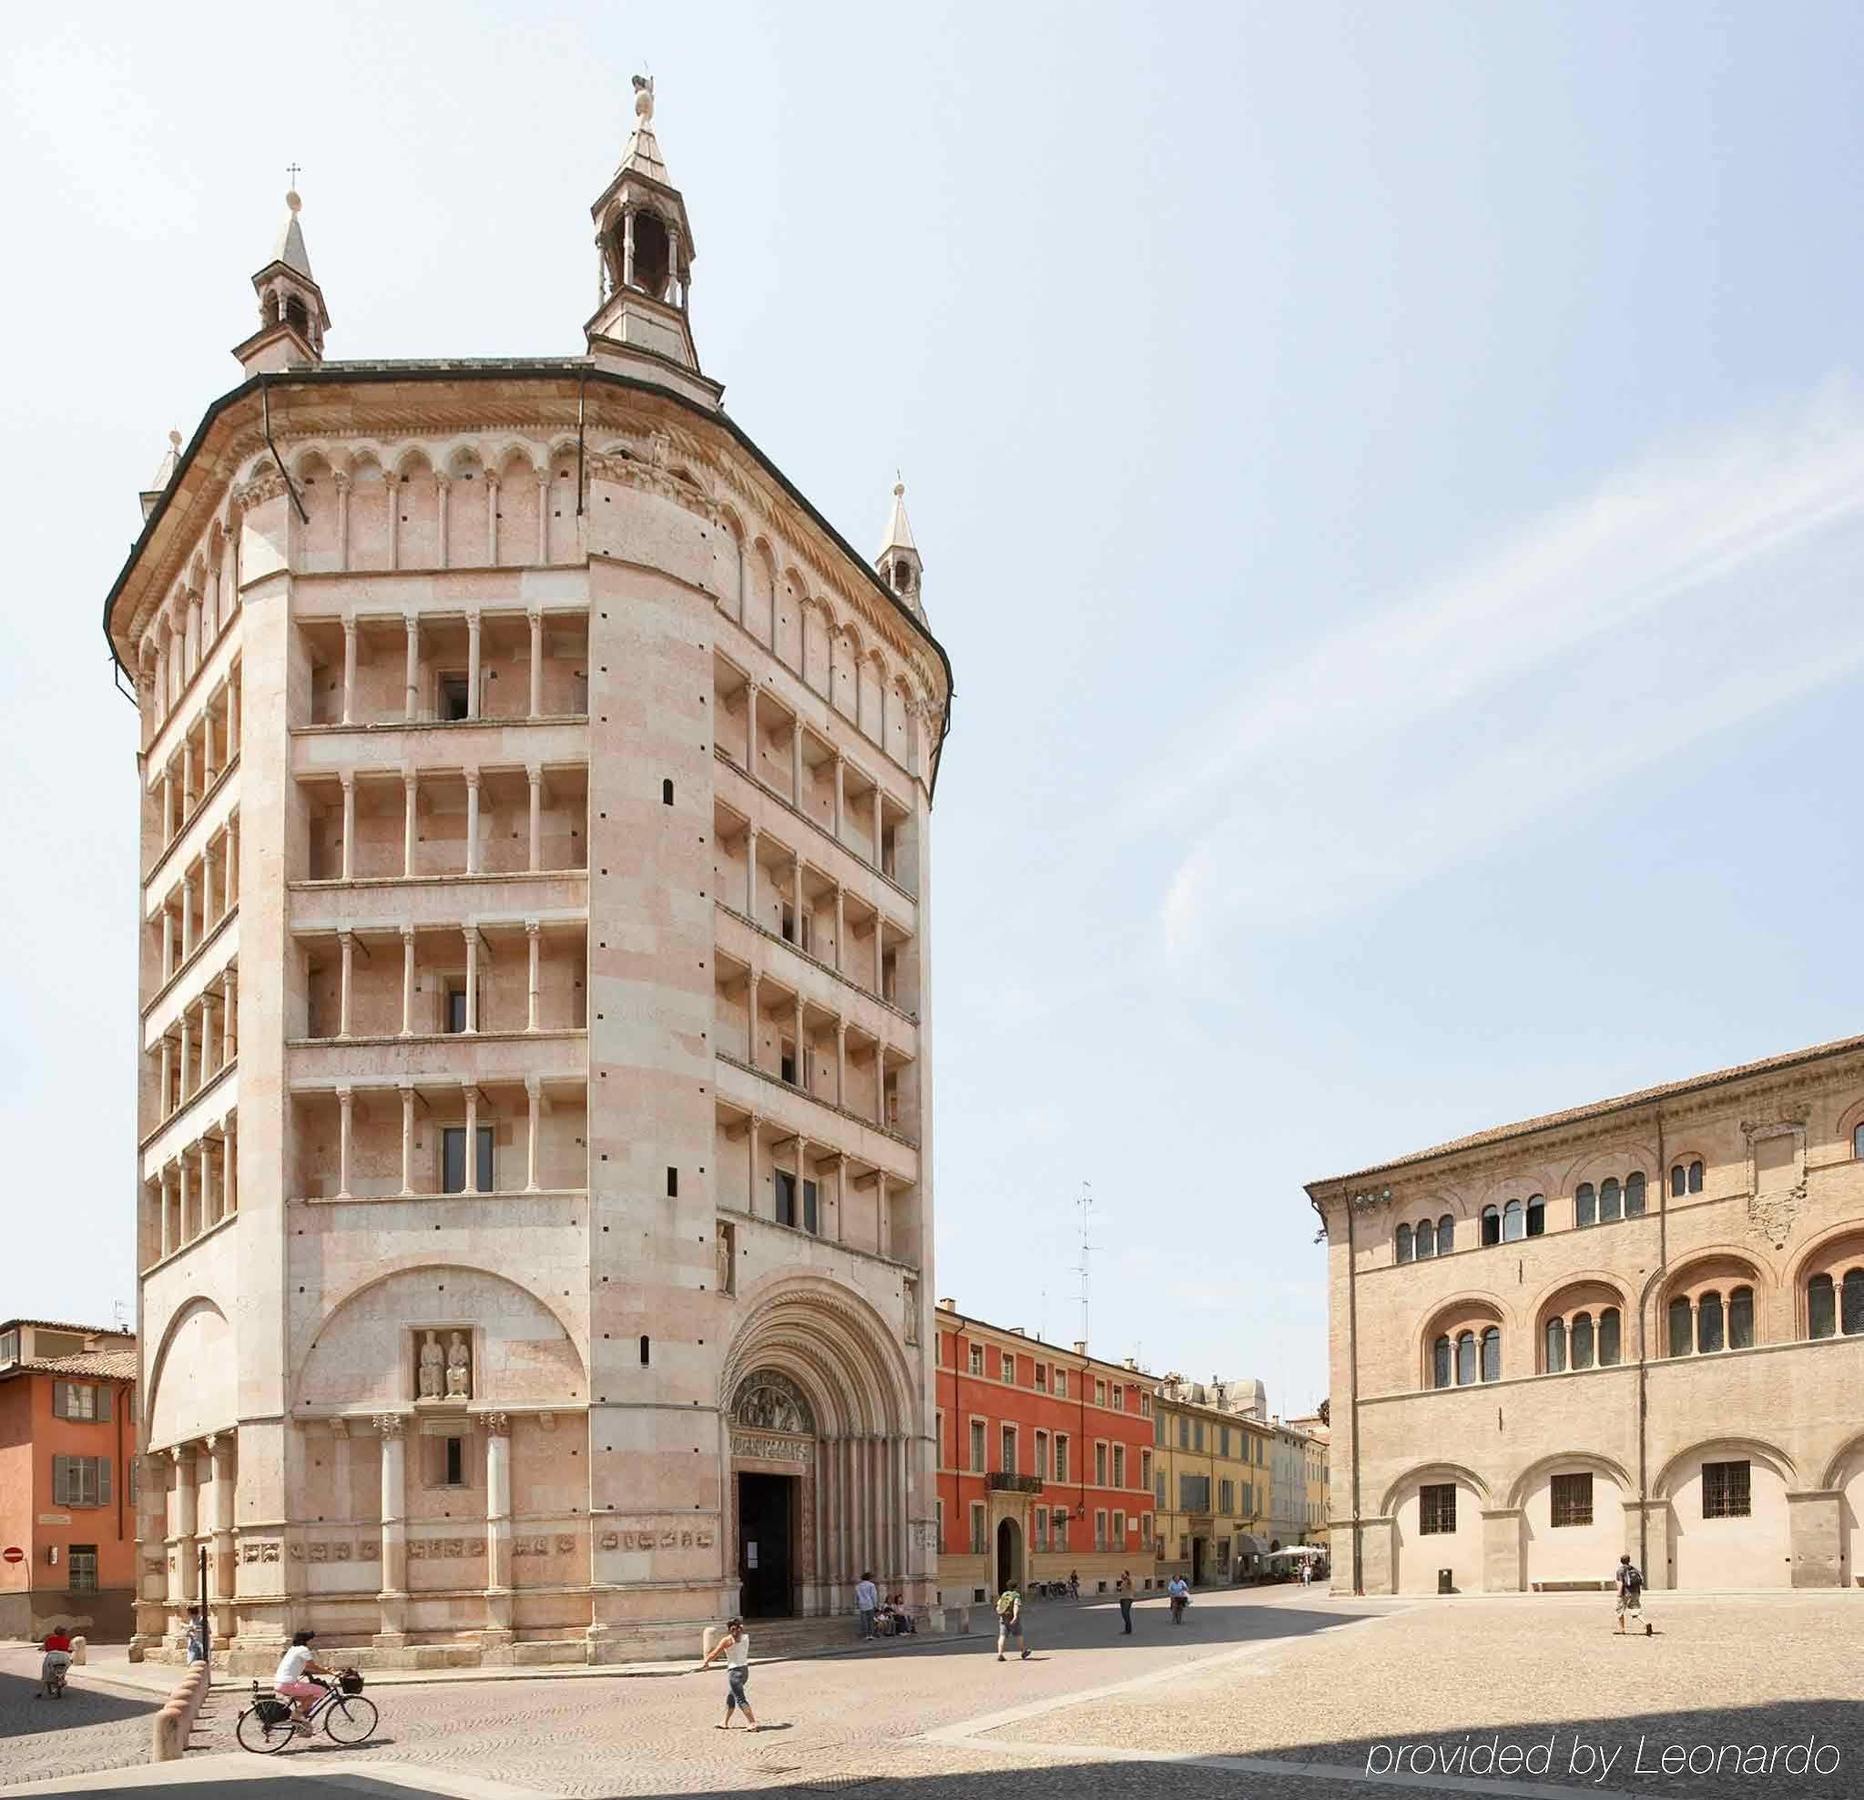 Mercure Parma Stendhal Exterior photo